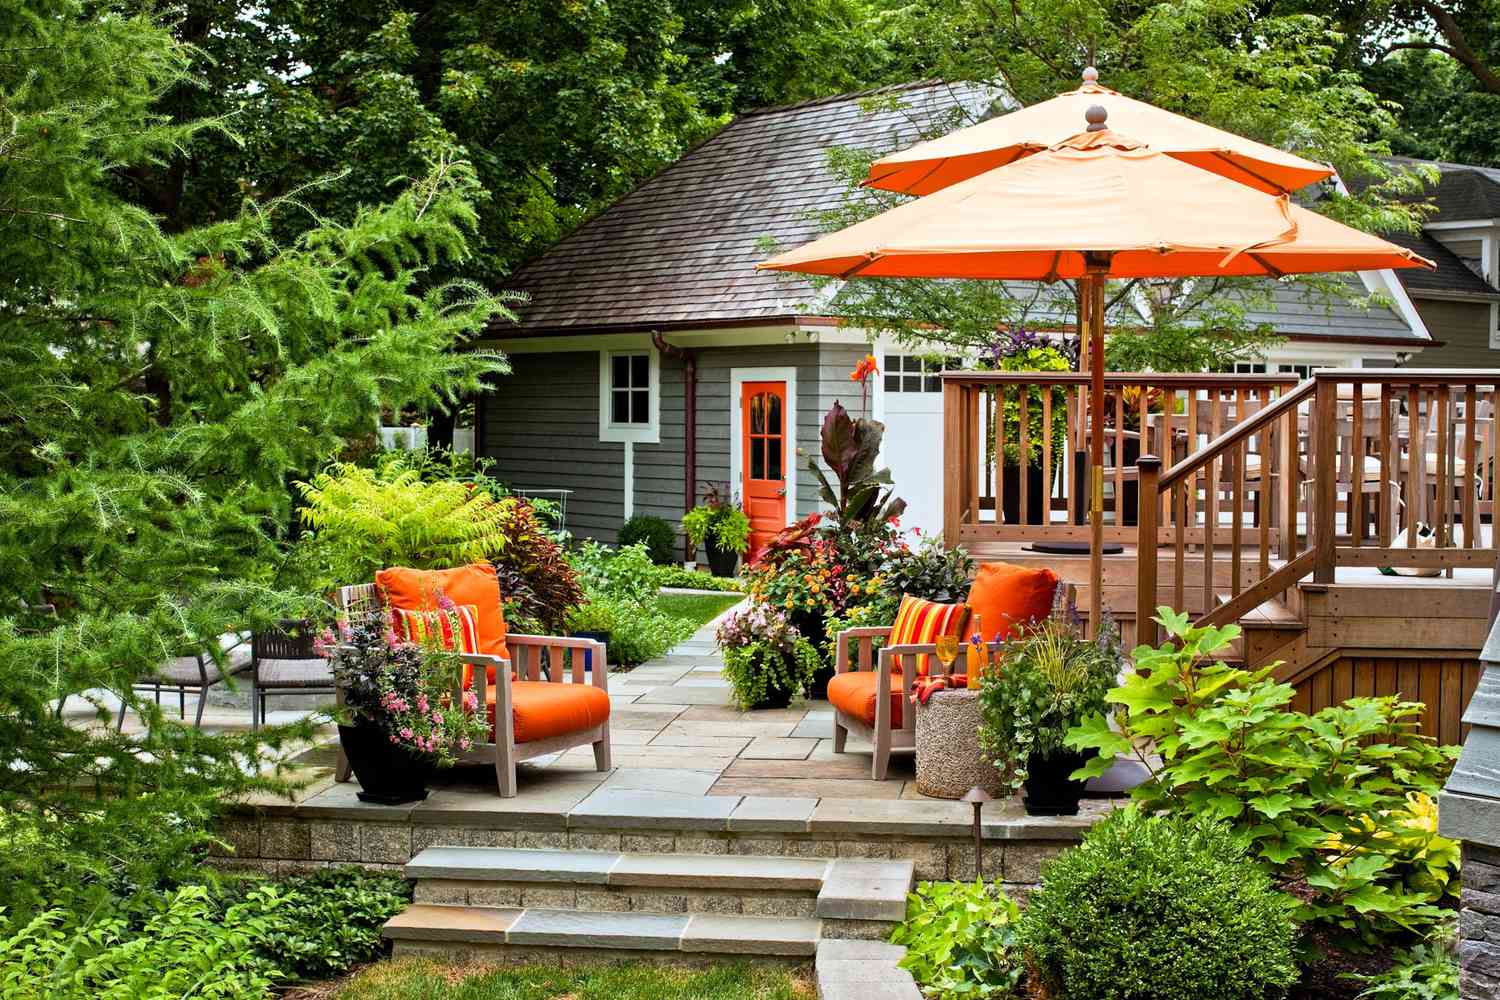 7 Beginner Landscape Design Tips to Make Your Garden Dreams Come True |  Better Homes & Gardens